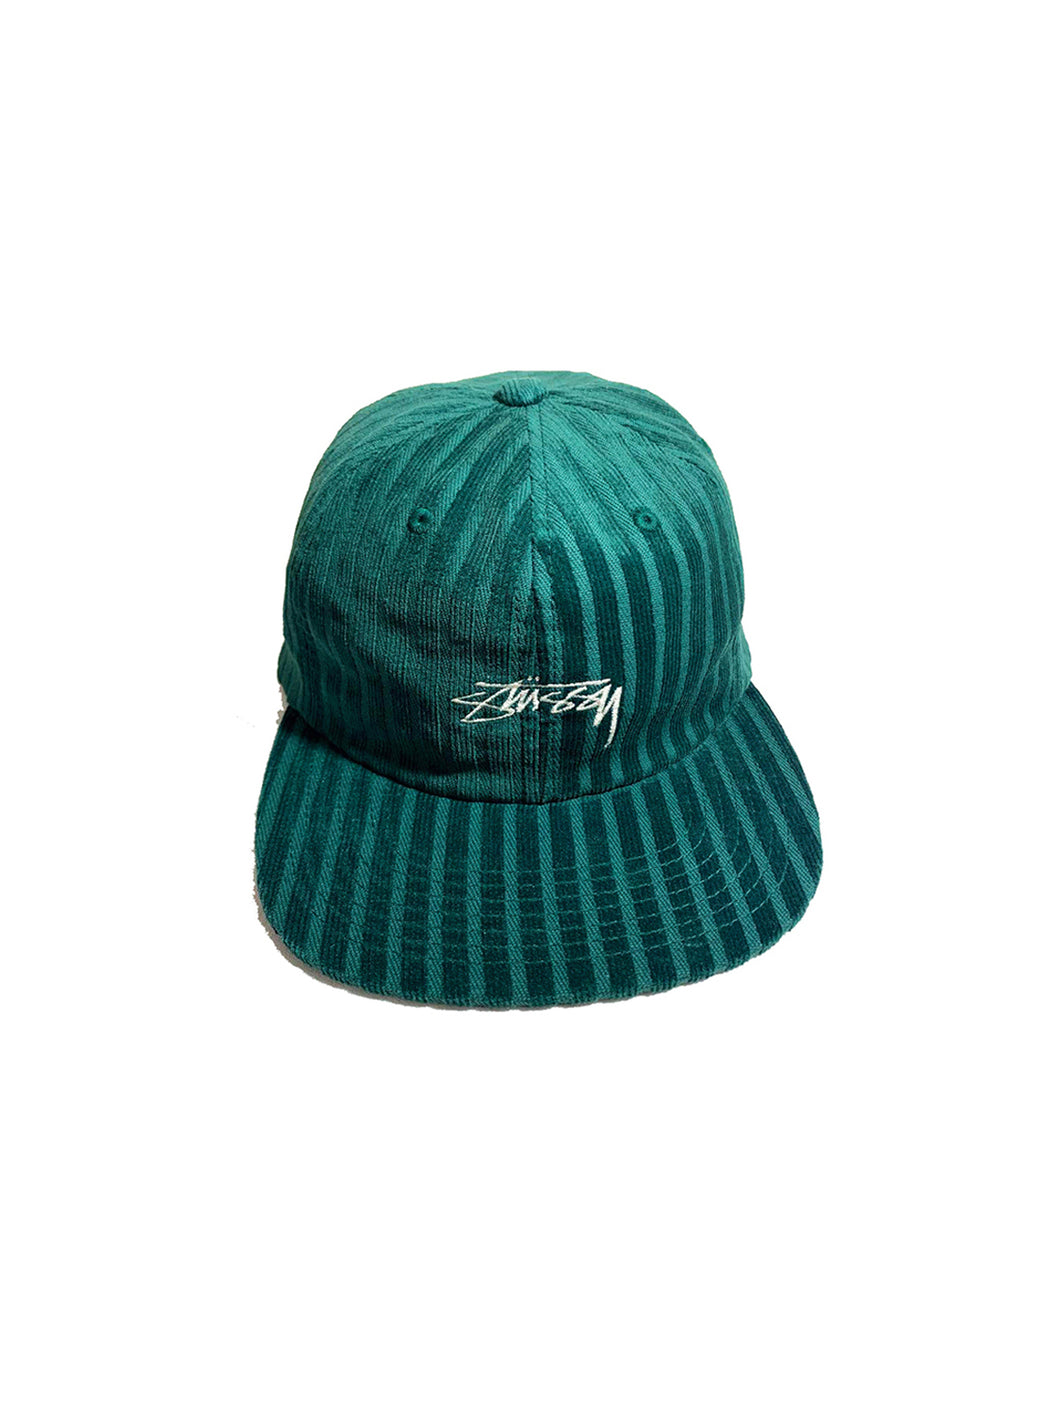 Stussy Green Striped Hat